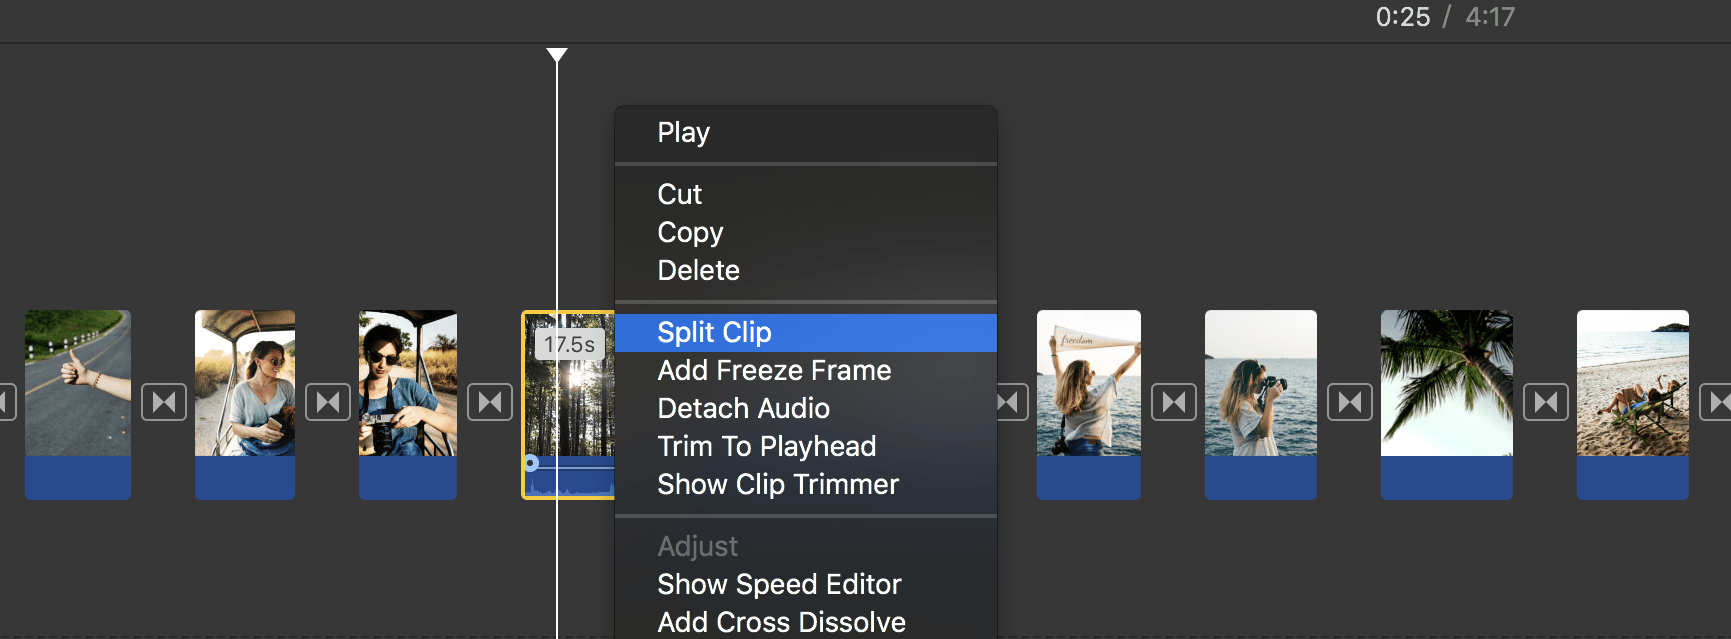 how to split screen on imovie on mac